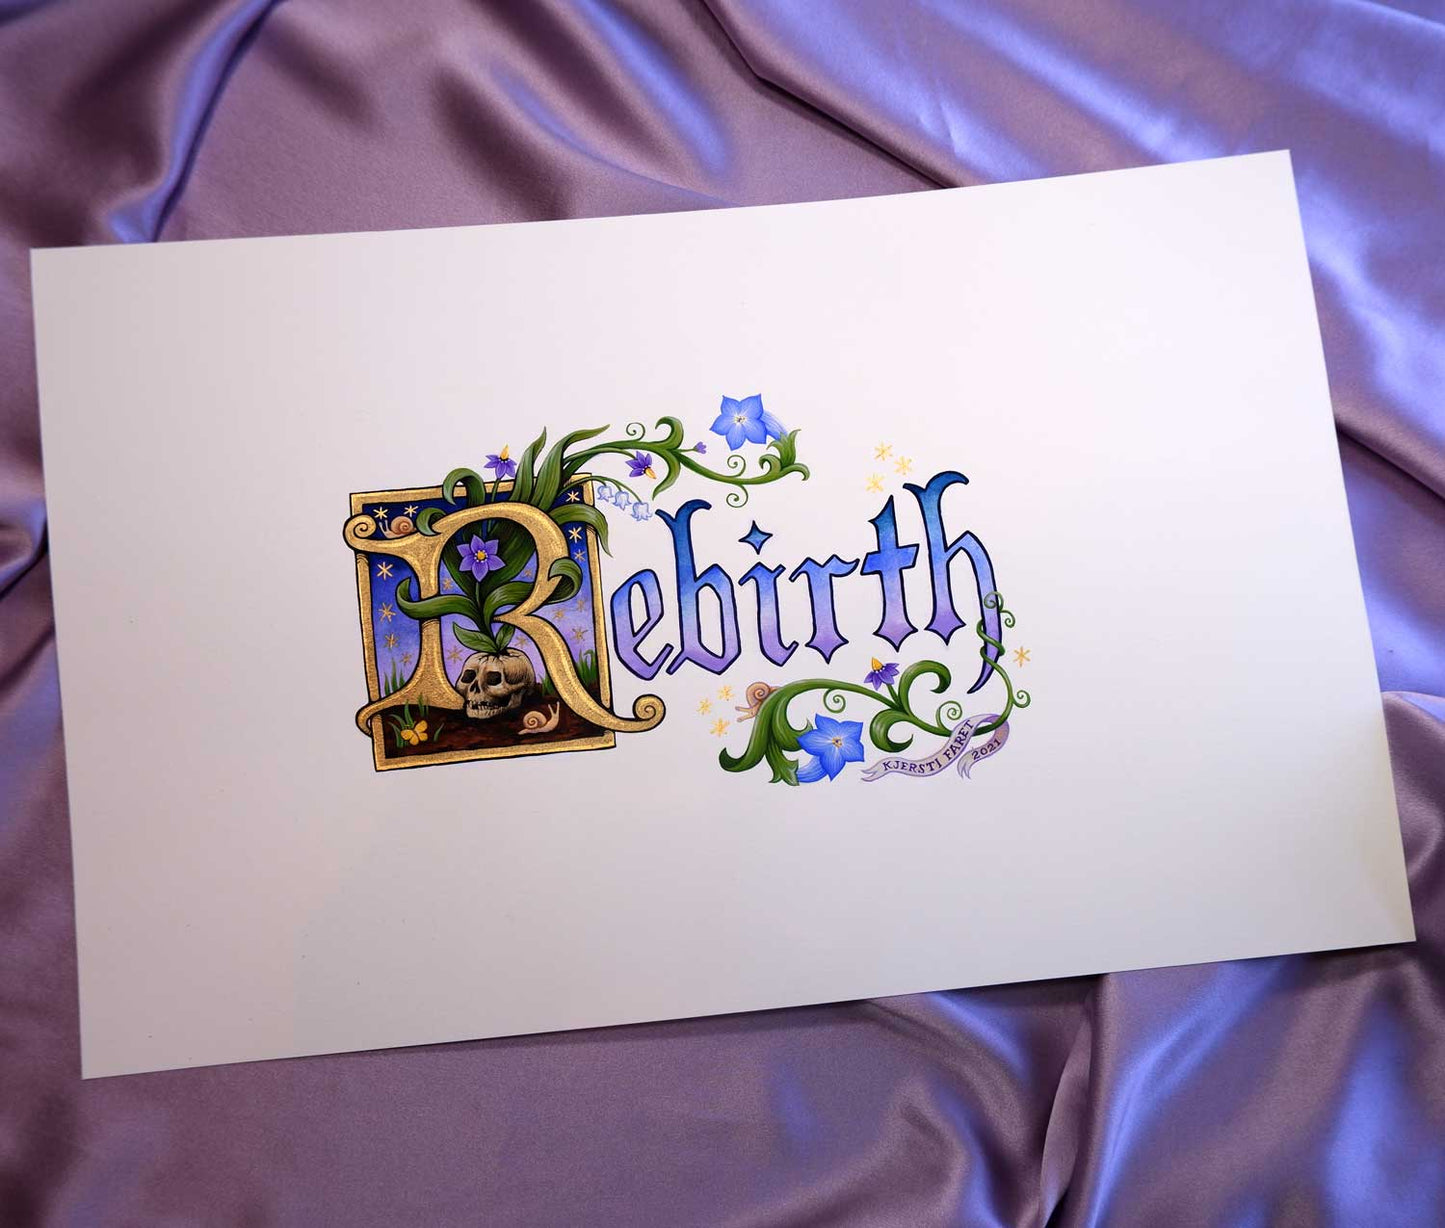 Rebirth Illuminated - Original Painting